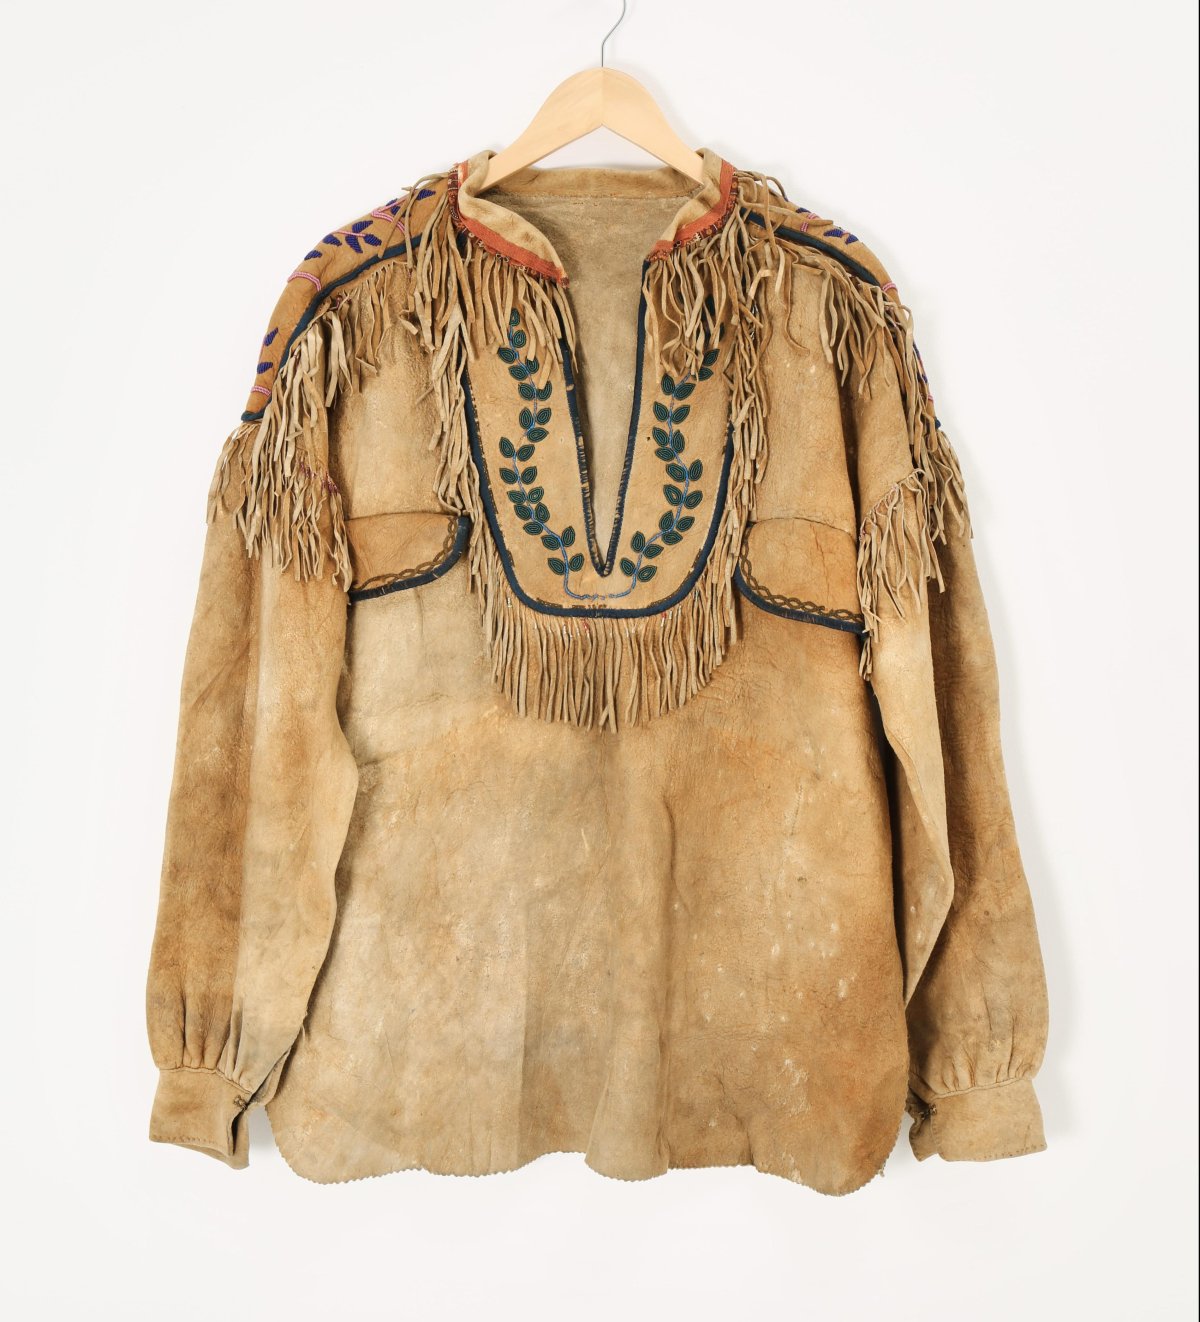 Jacket found in U.K. may have origins with Indigenous Manitobans 170 ...